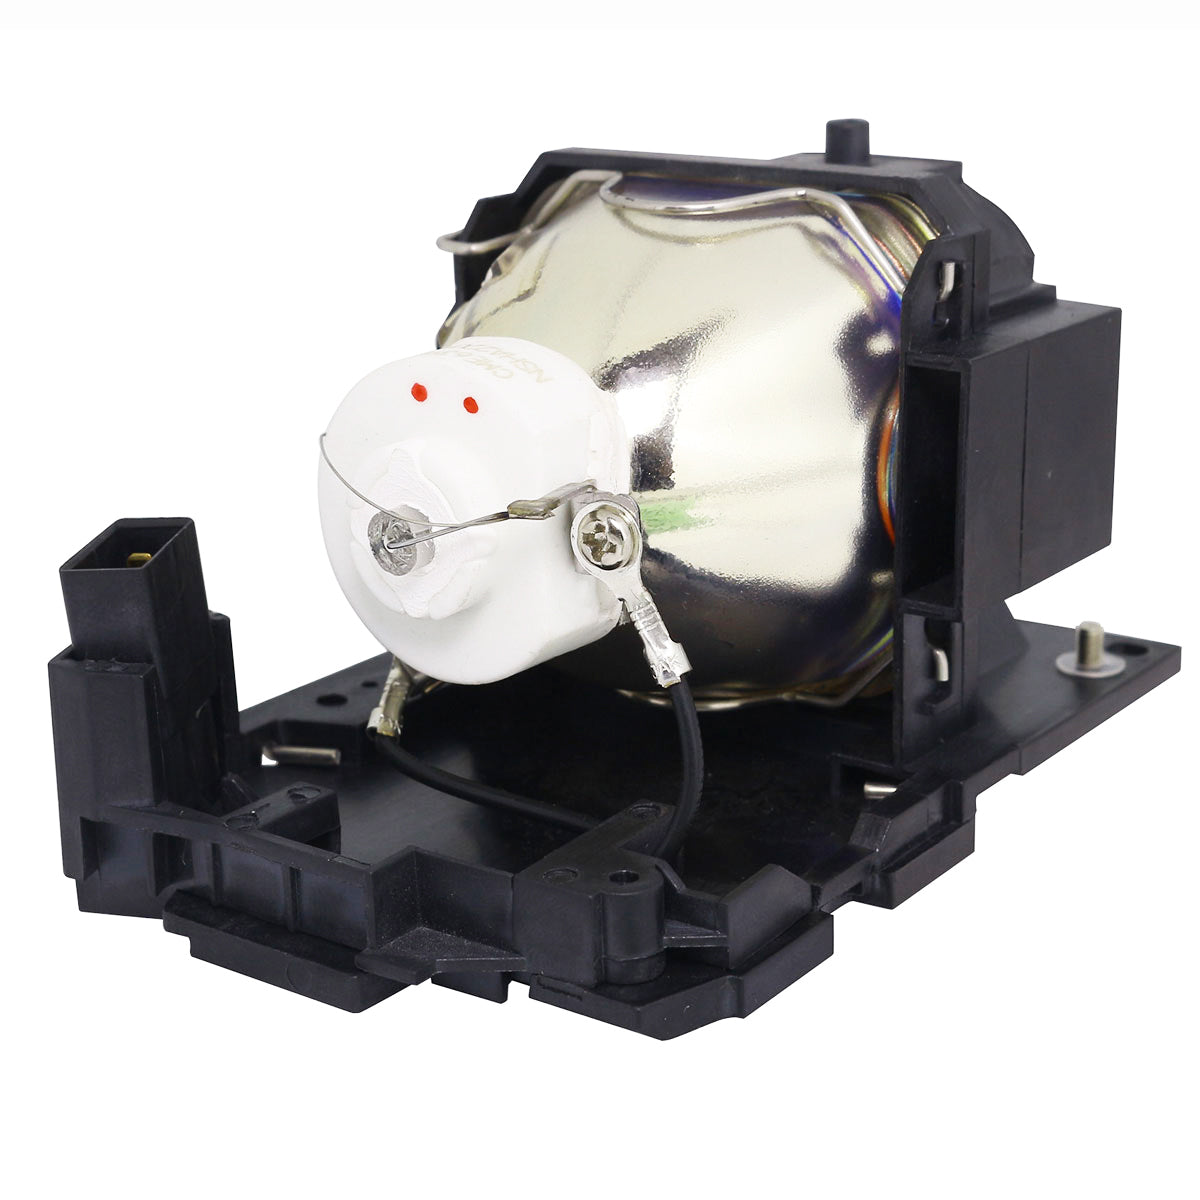 Hitachi DT01181 Ushio Projector Lamp Module